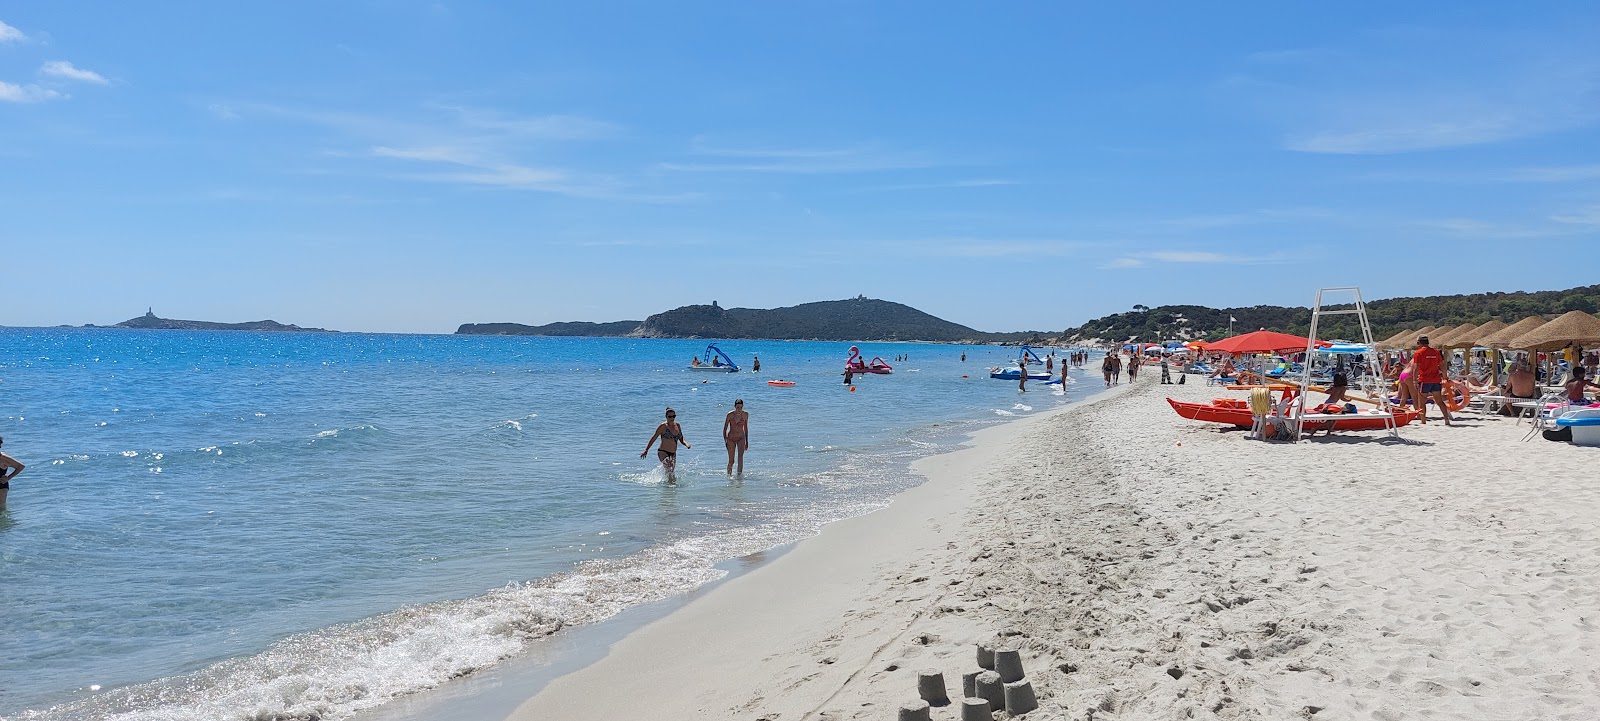 Foto av Spiaggia di Simius med lång rak strand